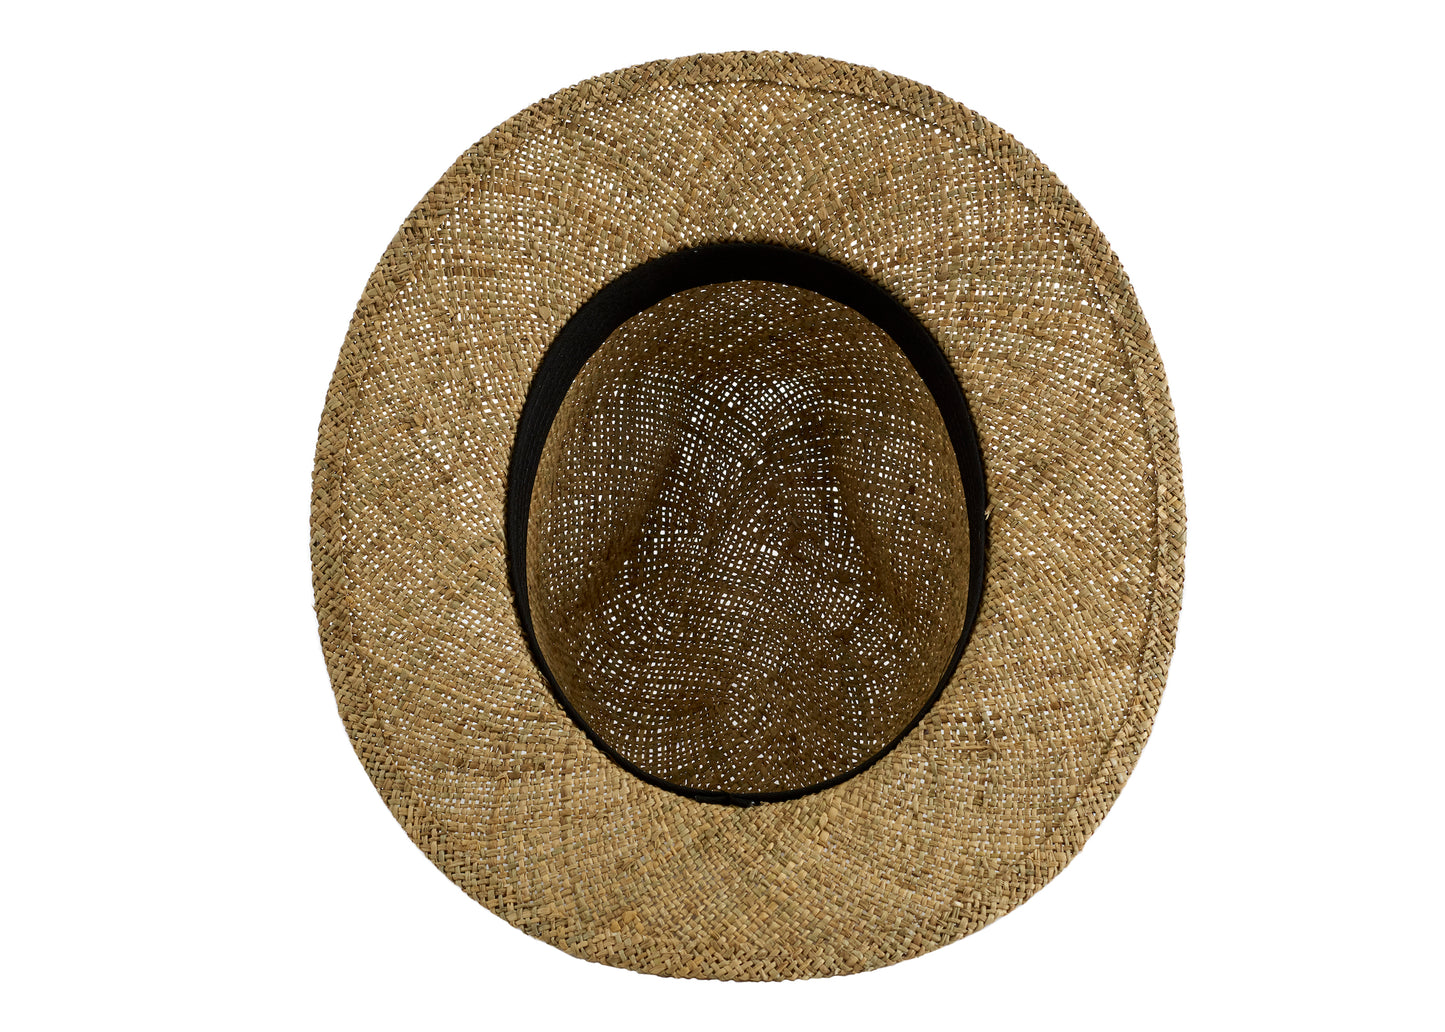 Safari Linen Hat